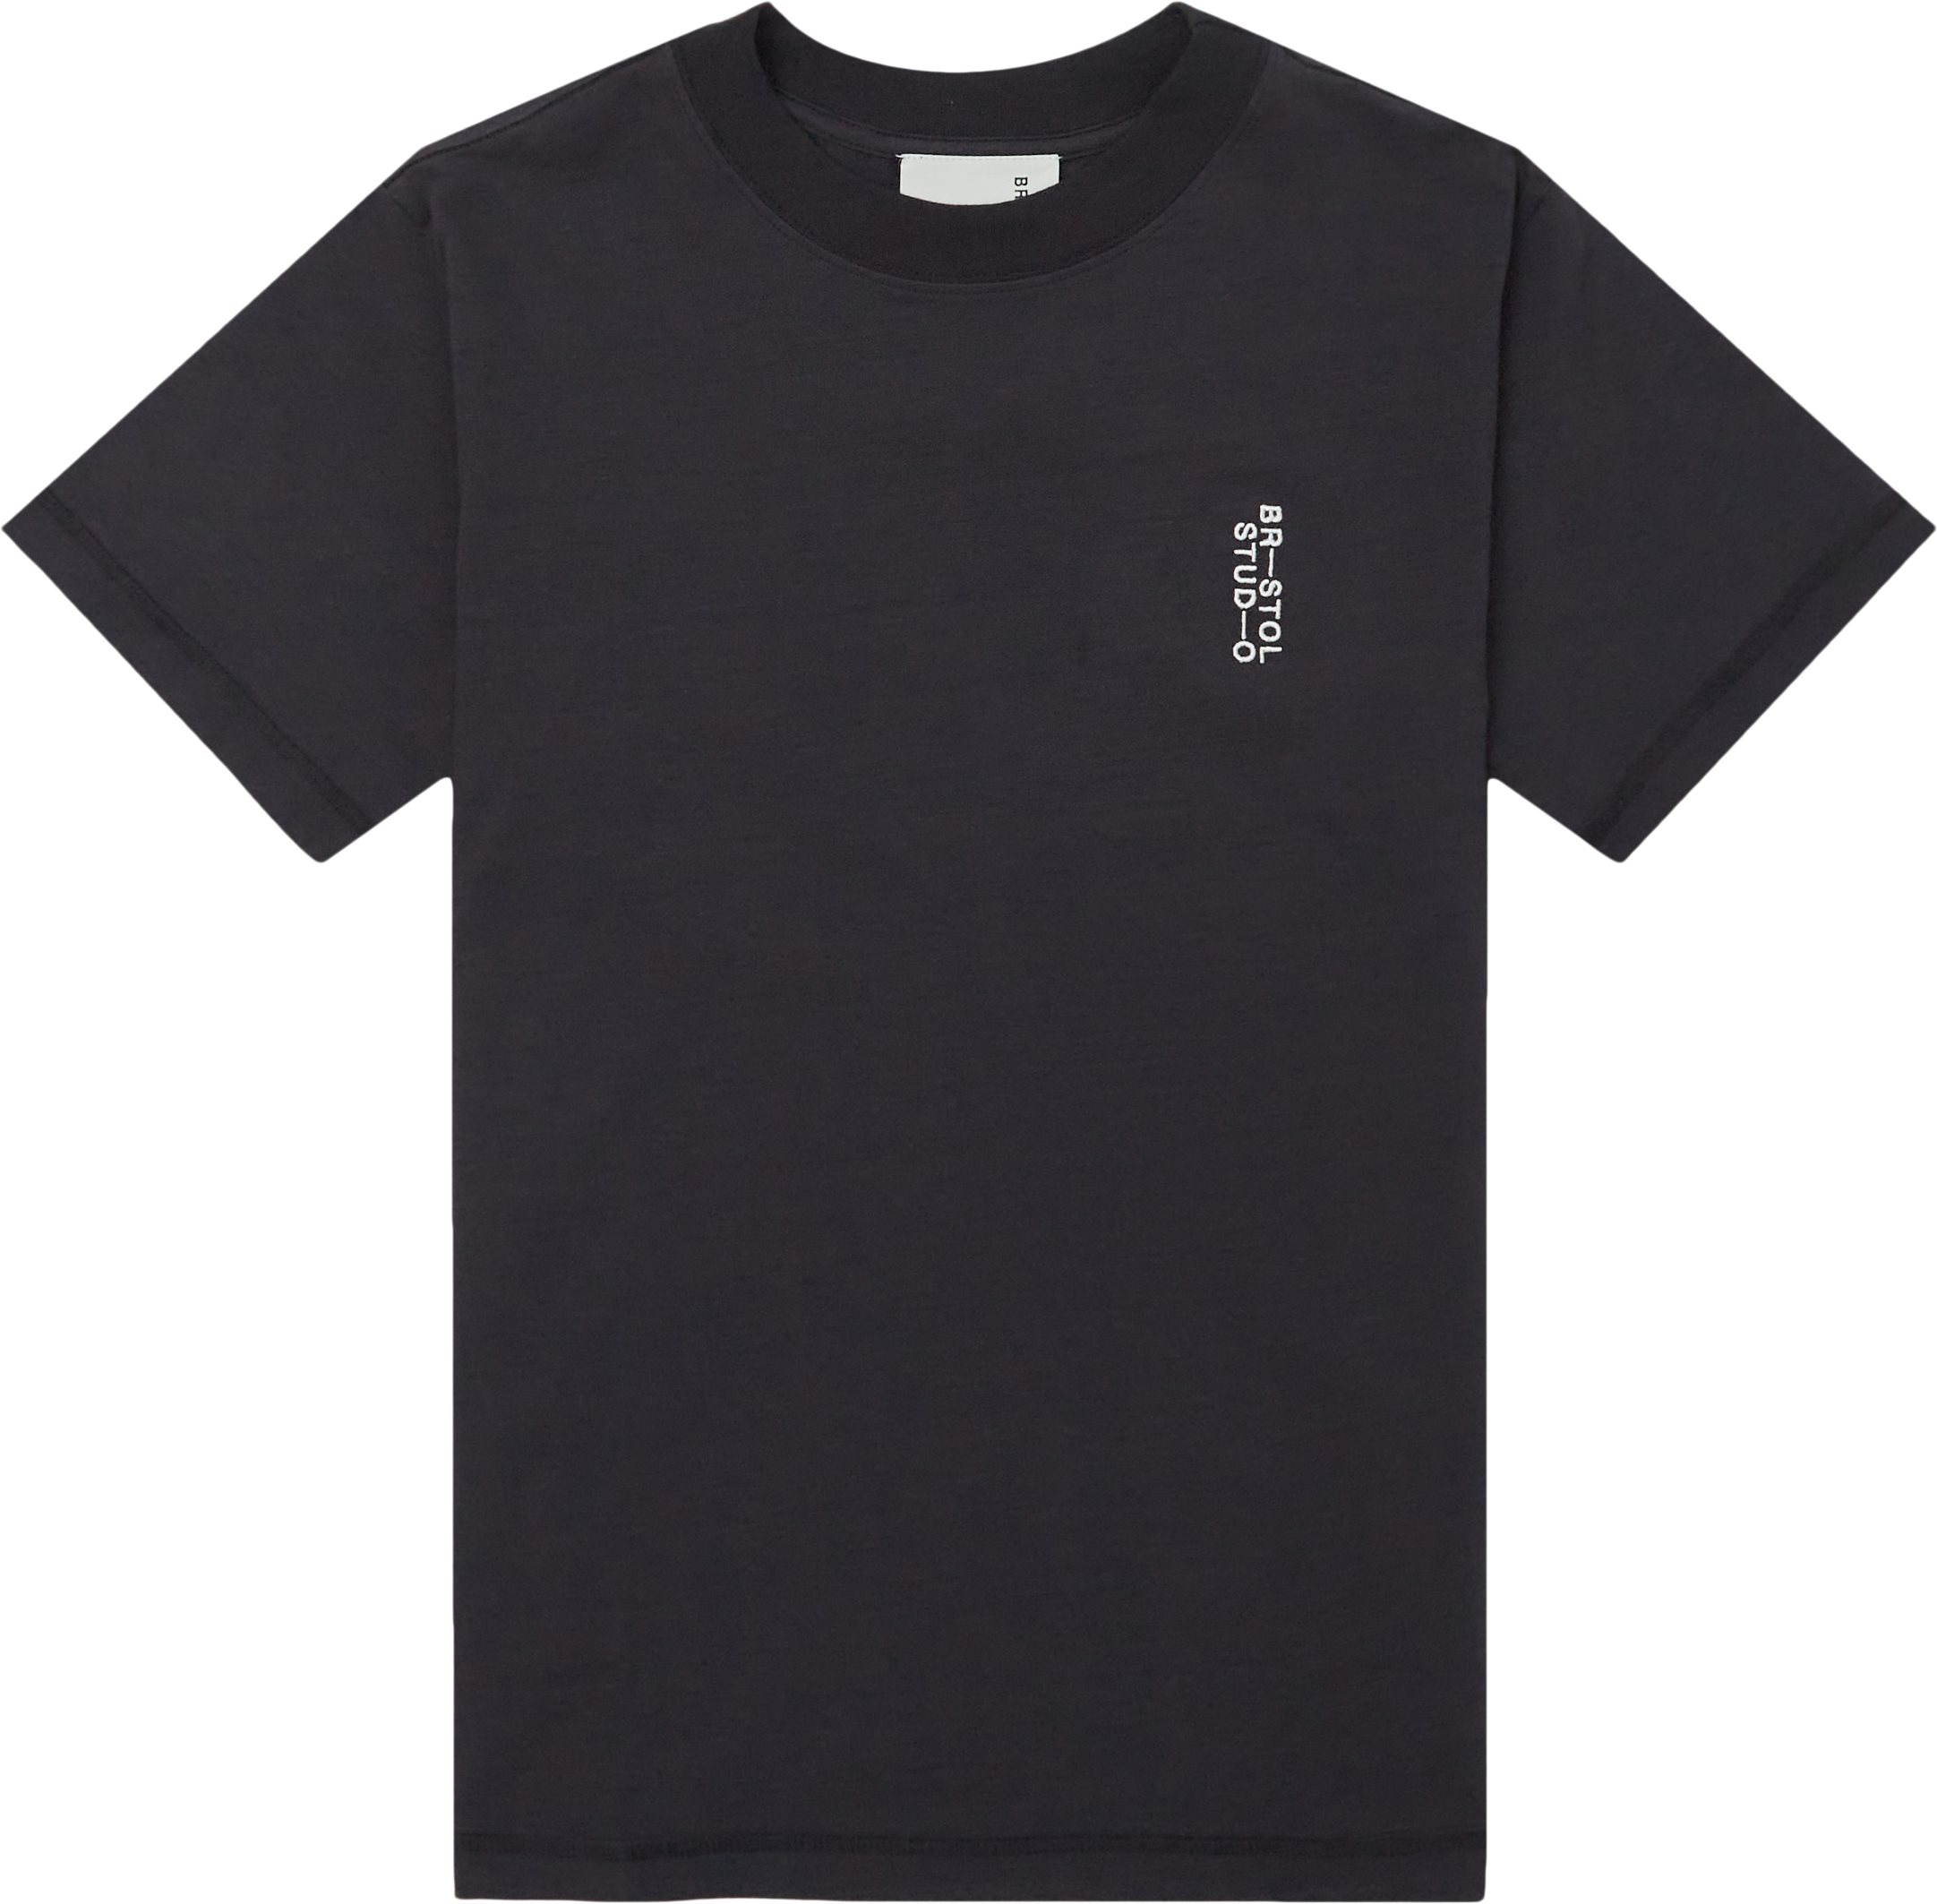 Signature Team Tee - T-shirts - Oversize fit - Svart